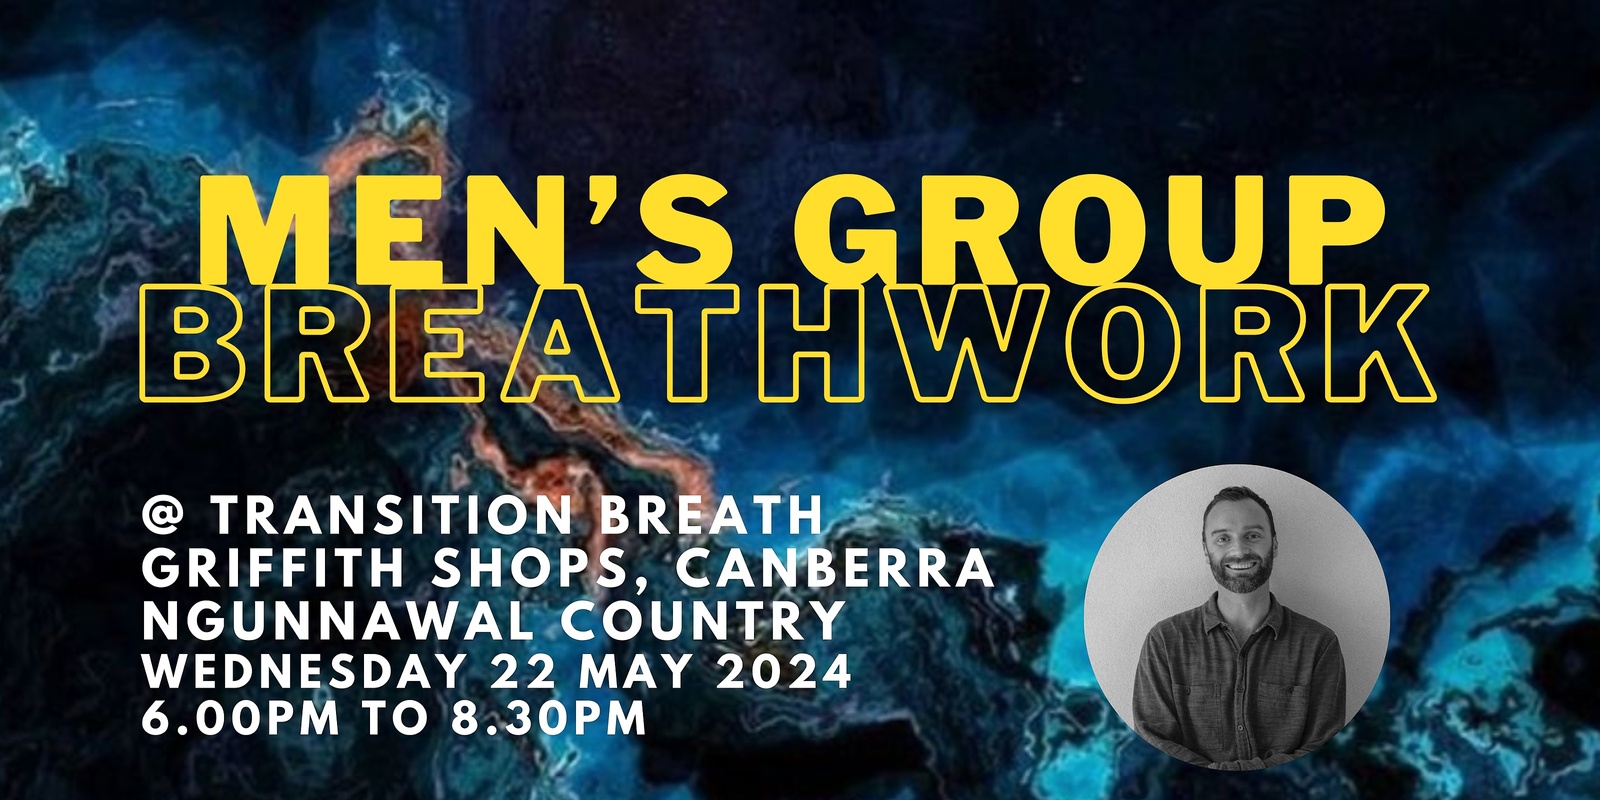 Banner image for Men's group breathwork gathering